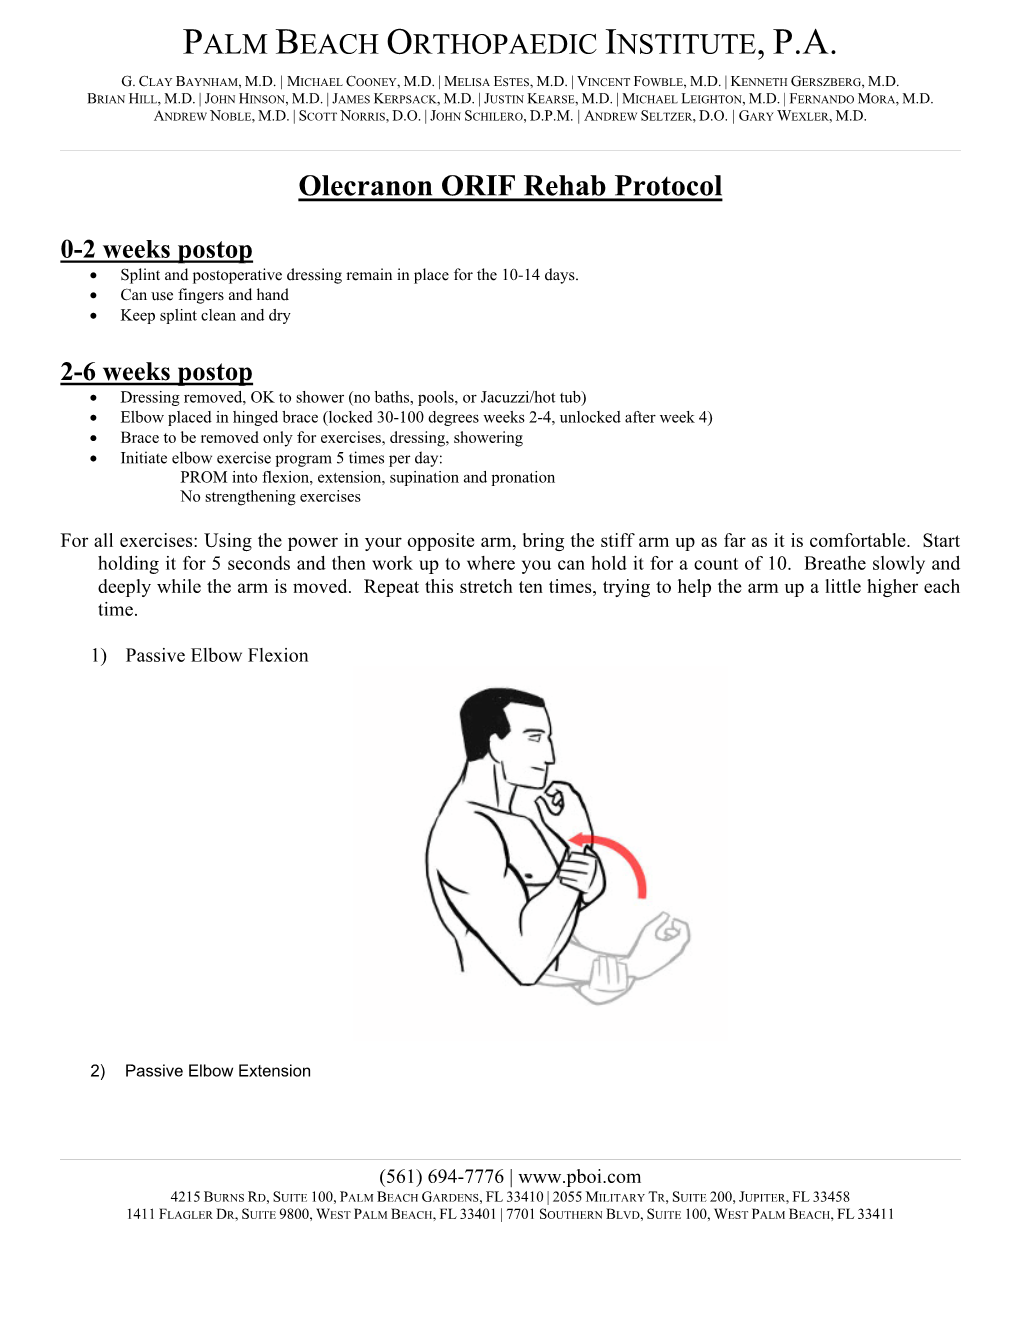 Olecranon ORIF Rehab Protocol